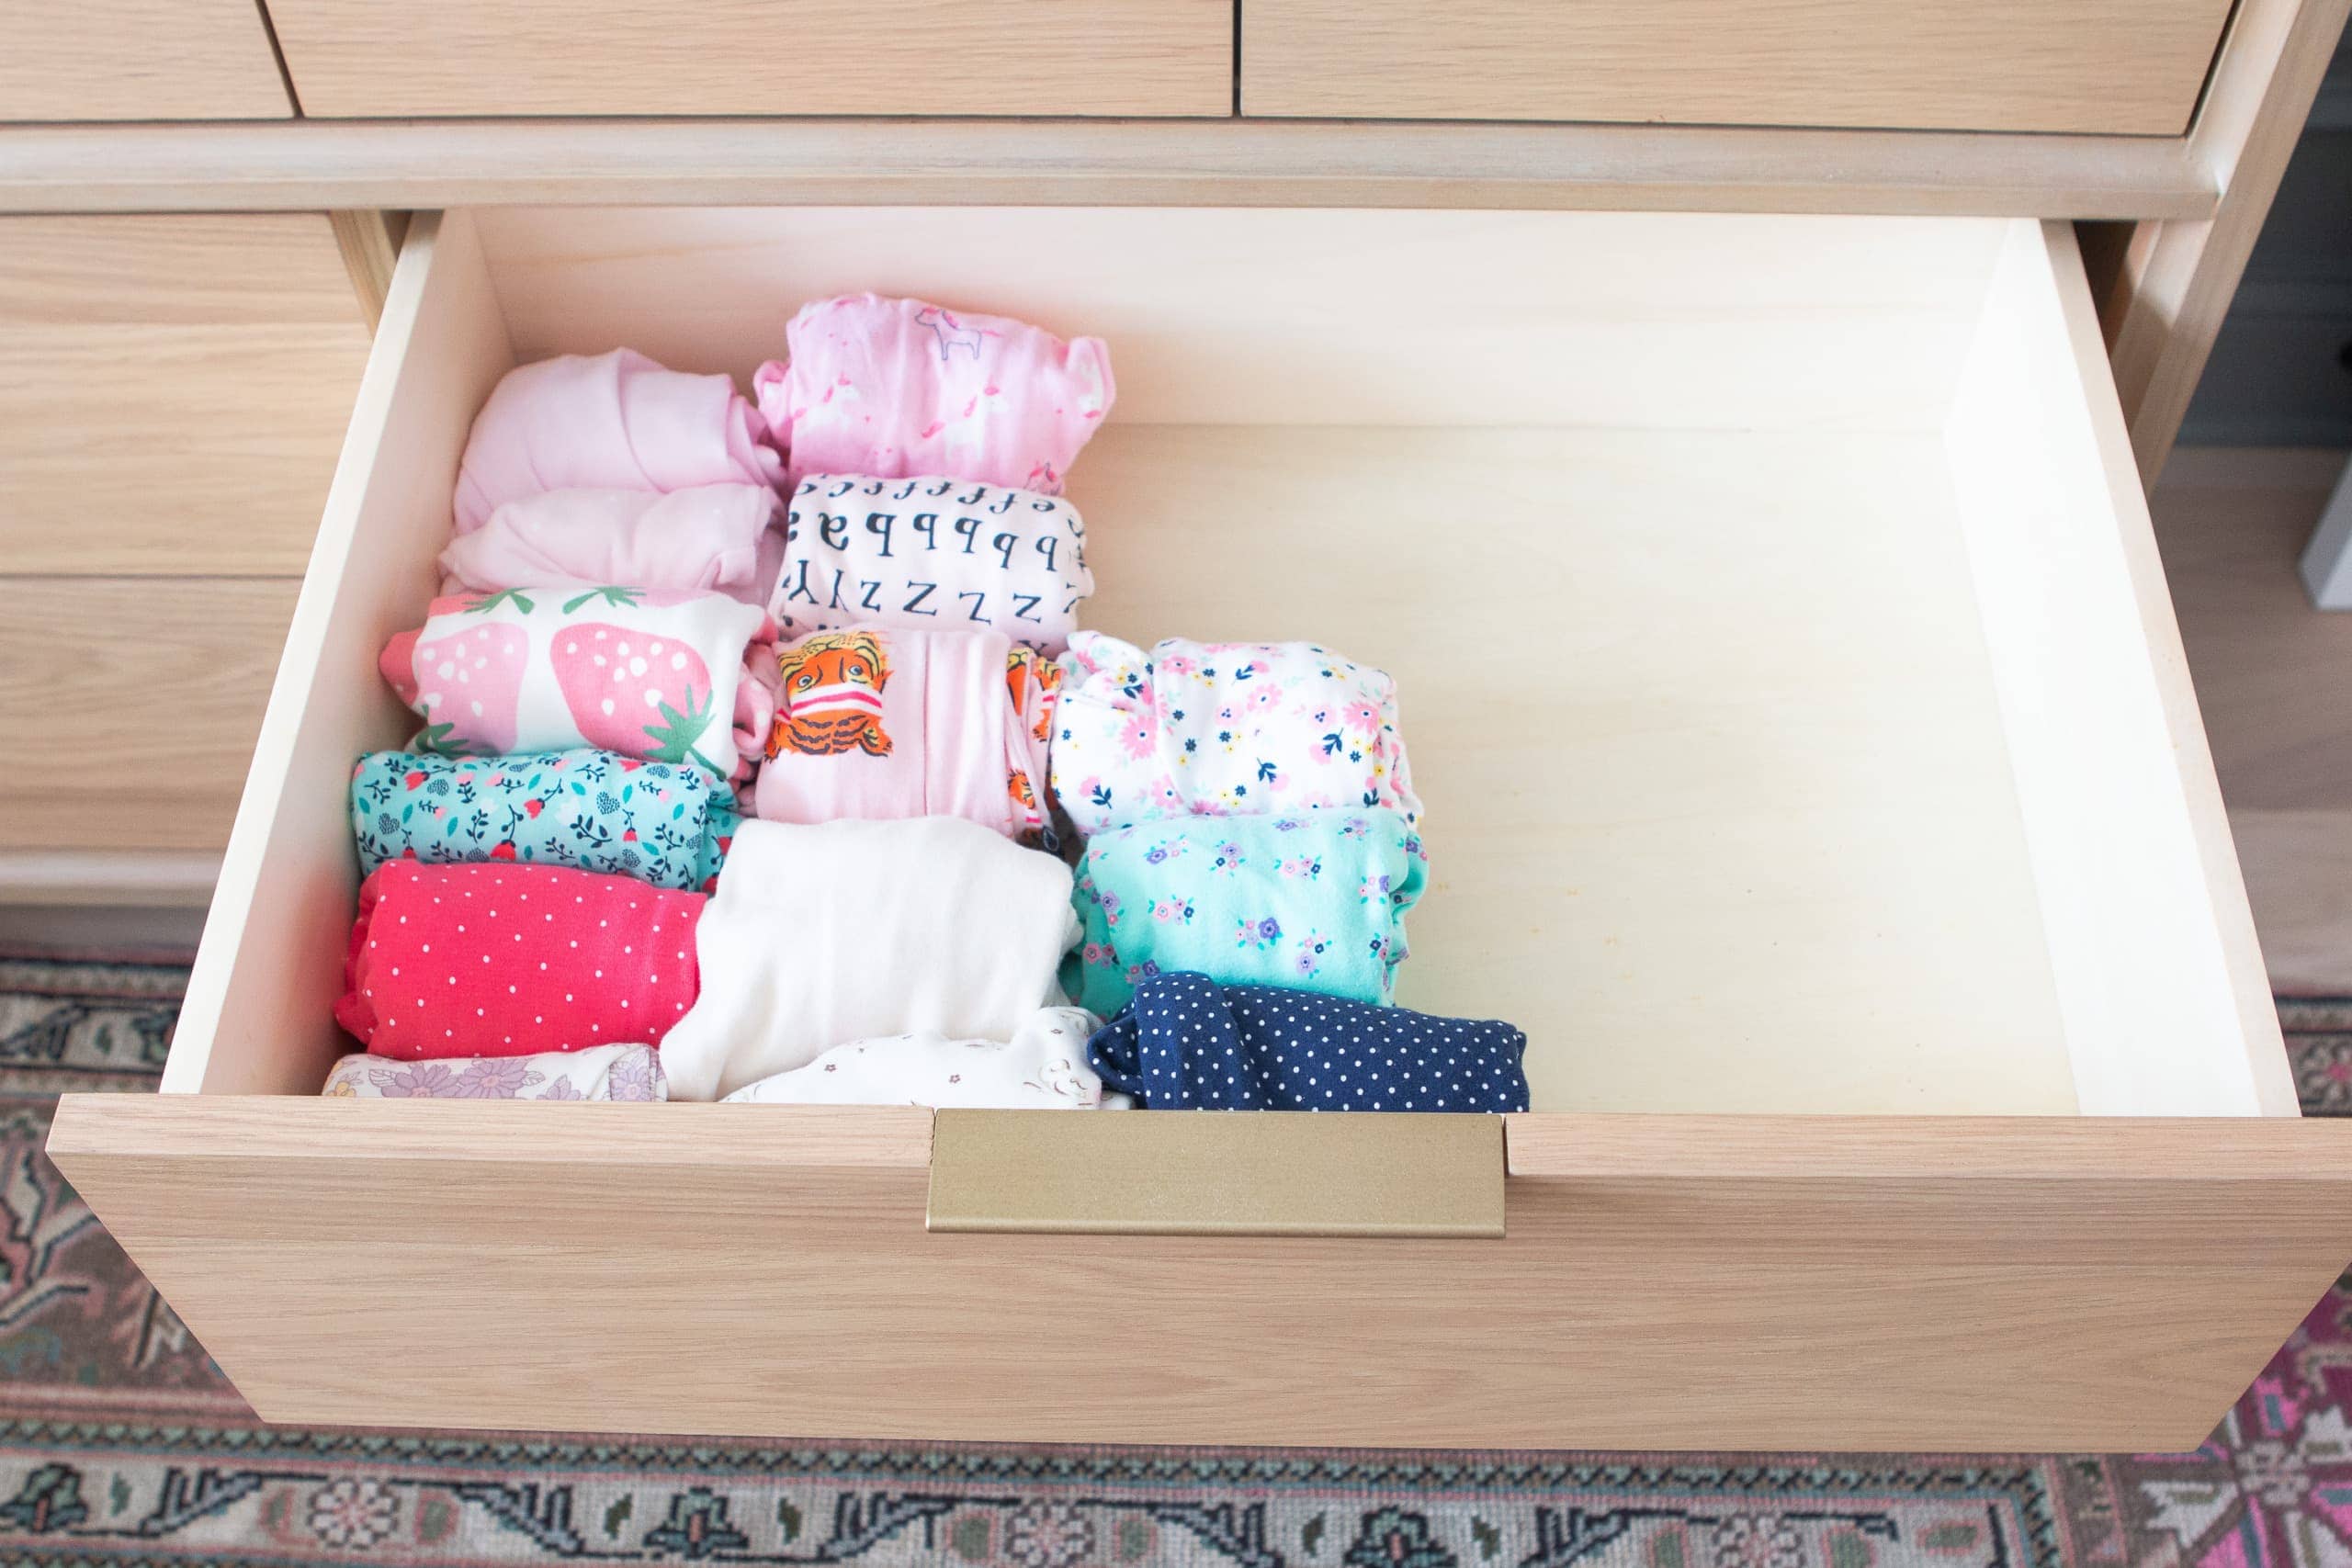 Adorable sleepers in a nursery dresser